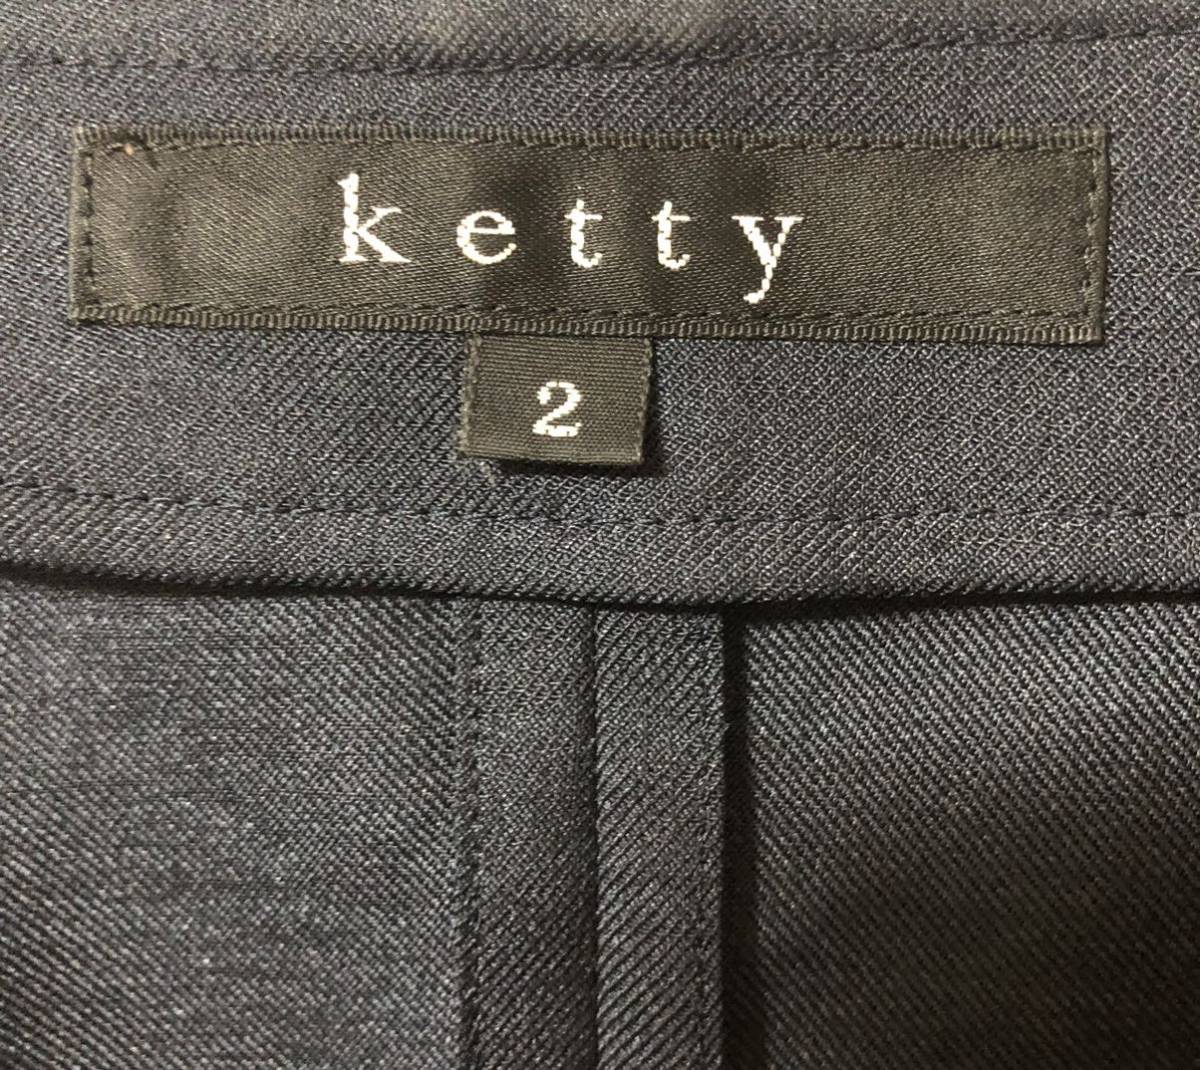 KETTY Katty no color jacket navy 2 size 